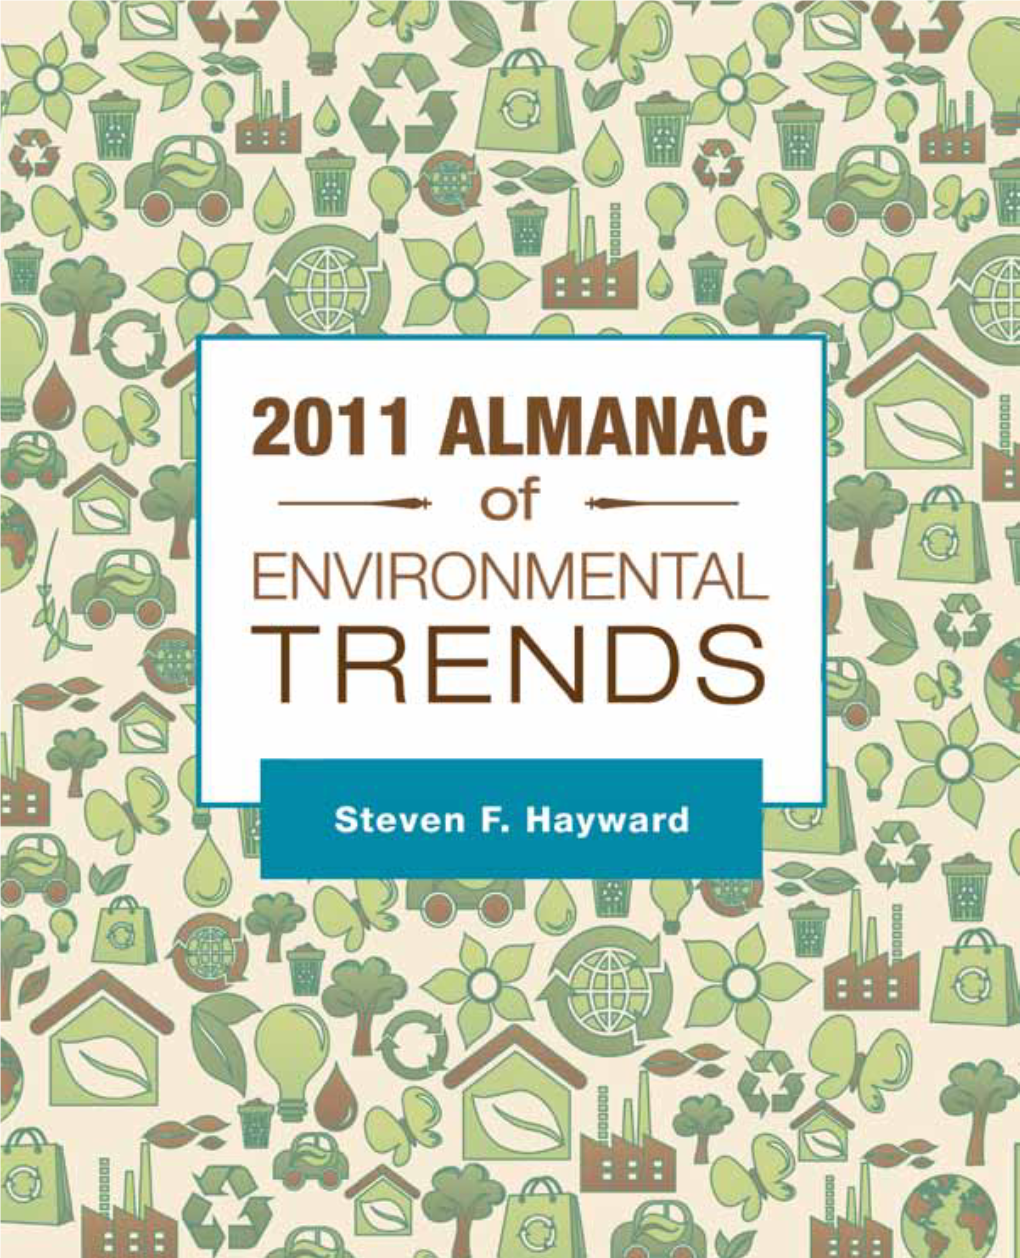 2011 ALMANAC of ENVIRONMENTAL TRENDS